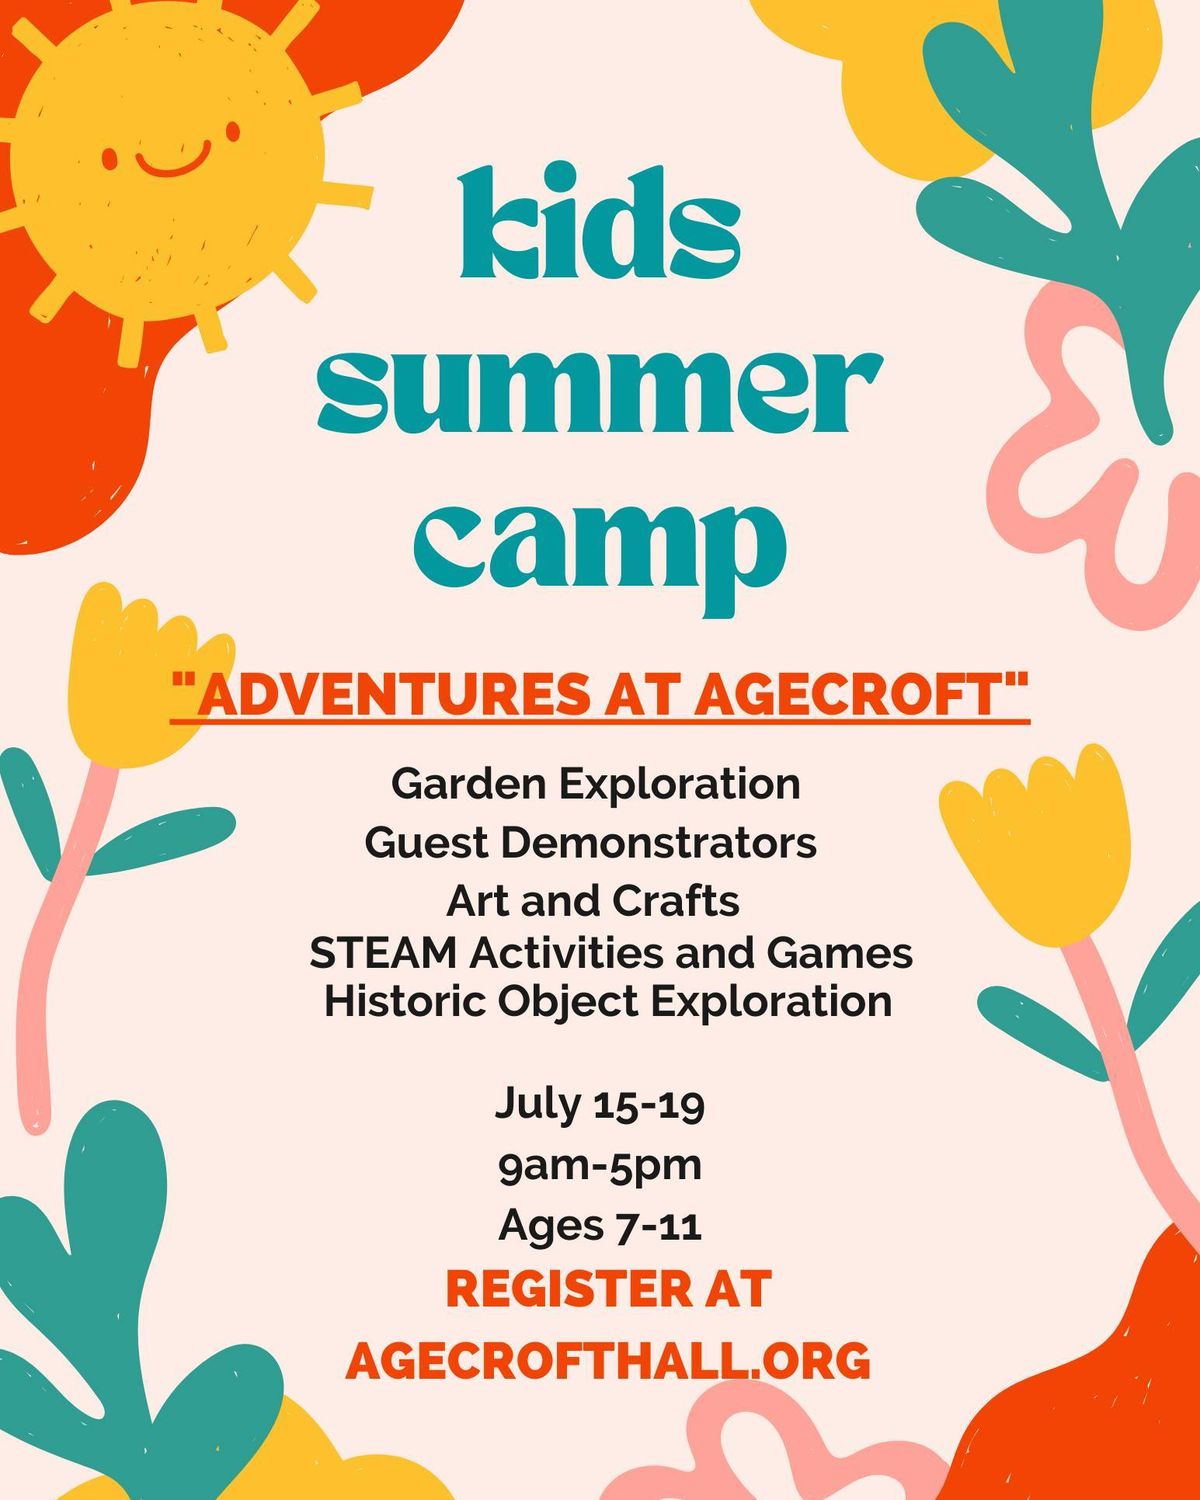 Adventures at Agecroft: Kids Summer Camp